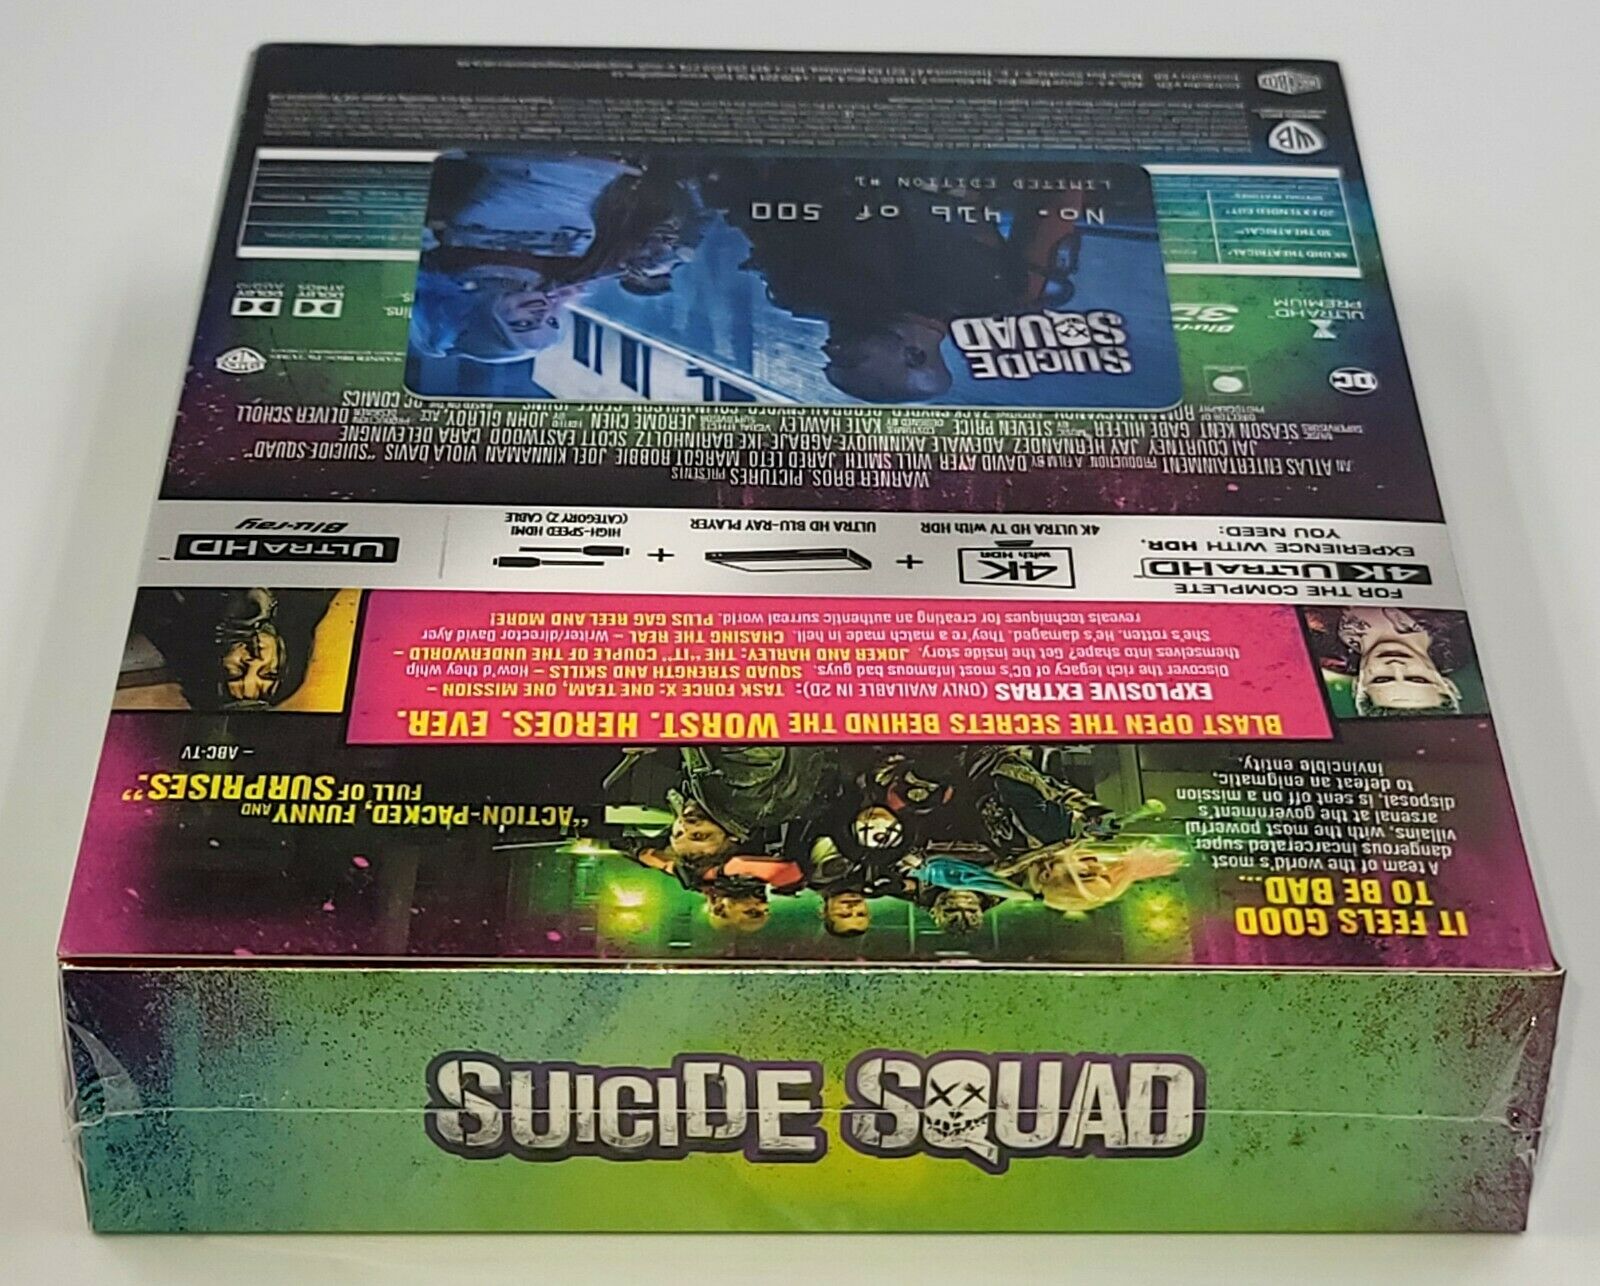 SUICIDE SQUAD [4K UHD + 3D + 2D] Blu-ray STEELBOOK [FILMARENA] XL FULLSLIP